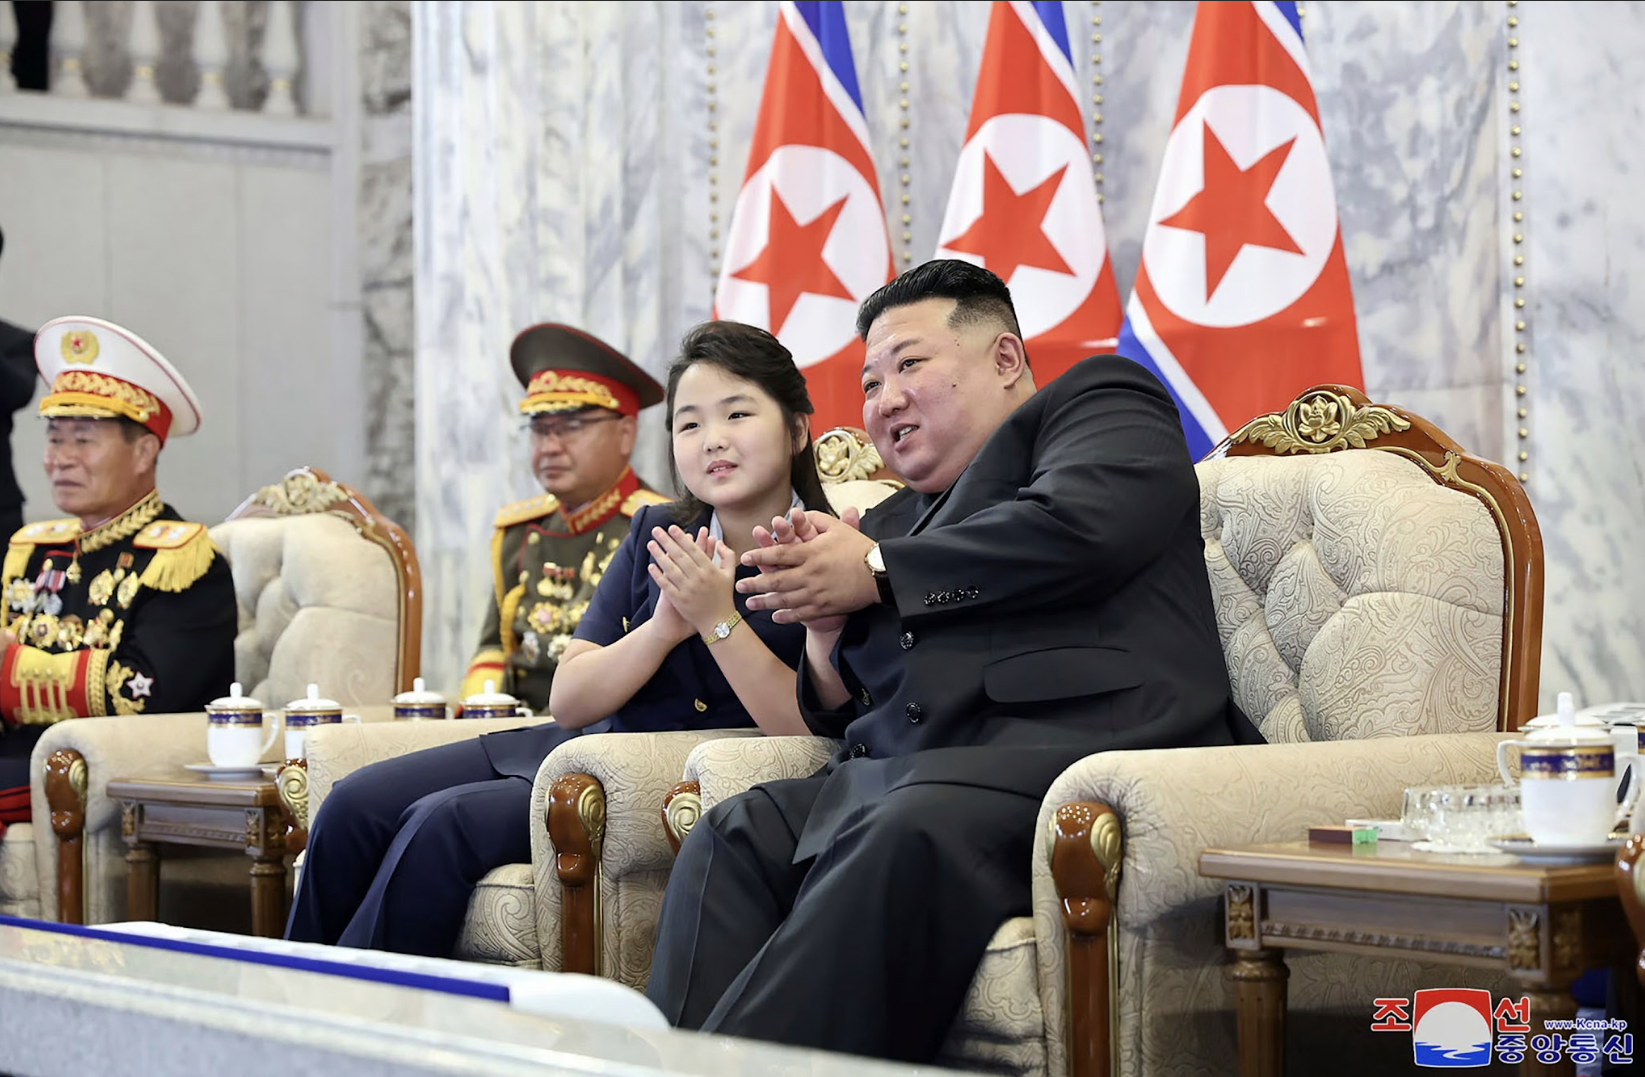 Kim Jong Un Drops the Biggest Hint Yet About His Successor 1